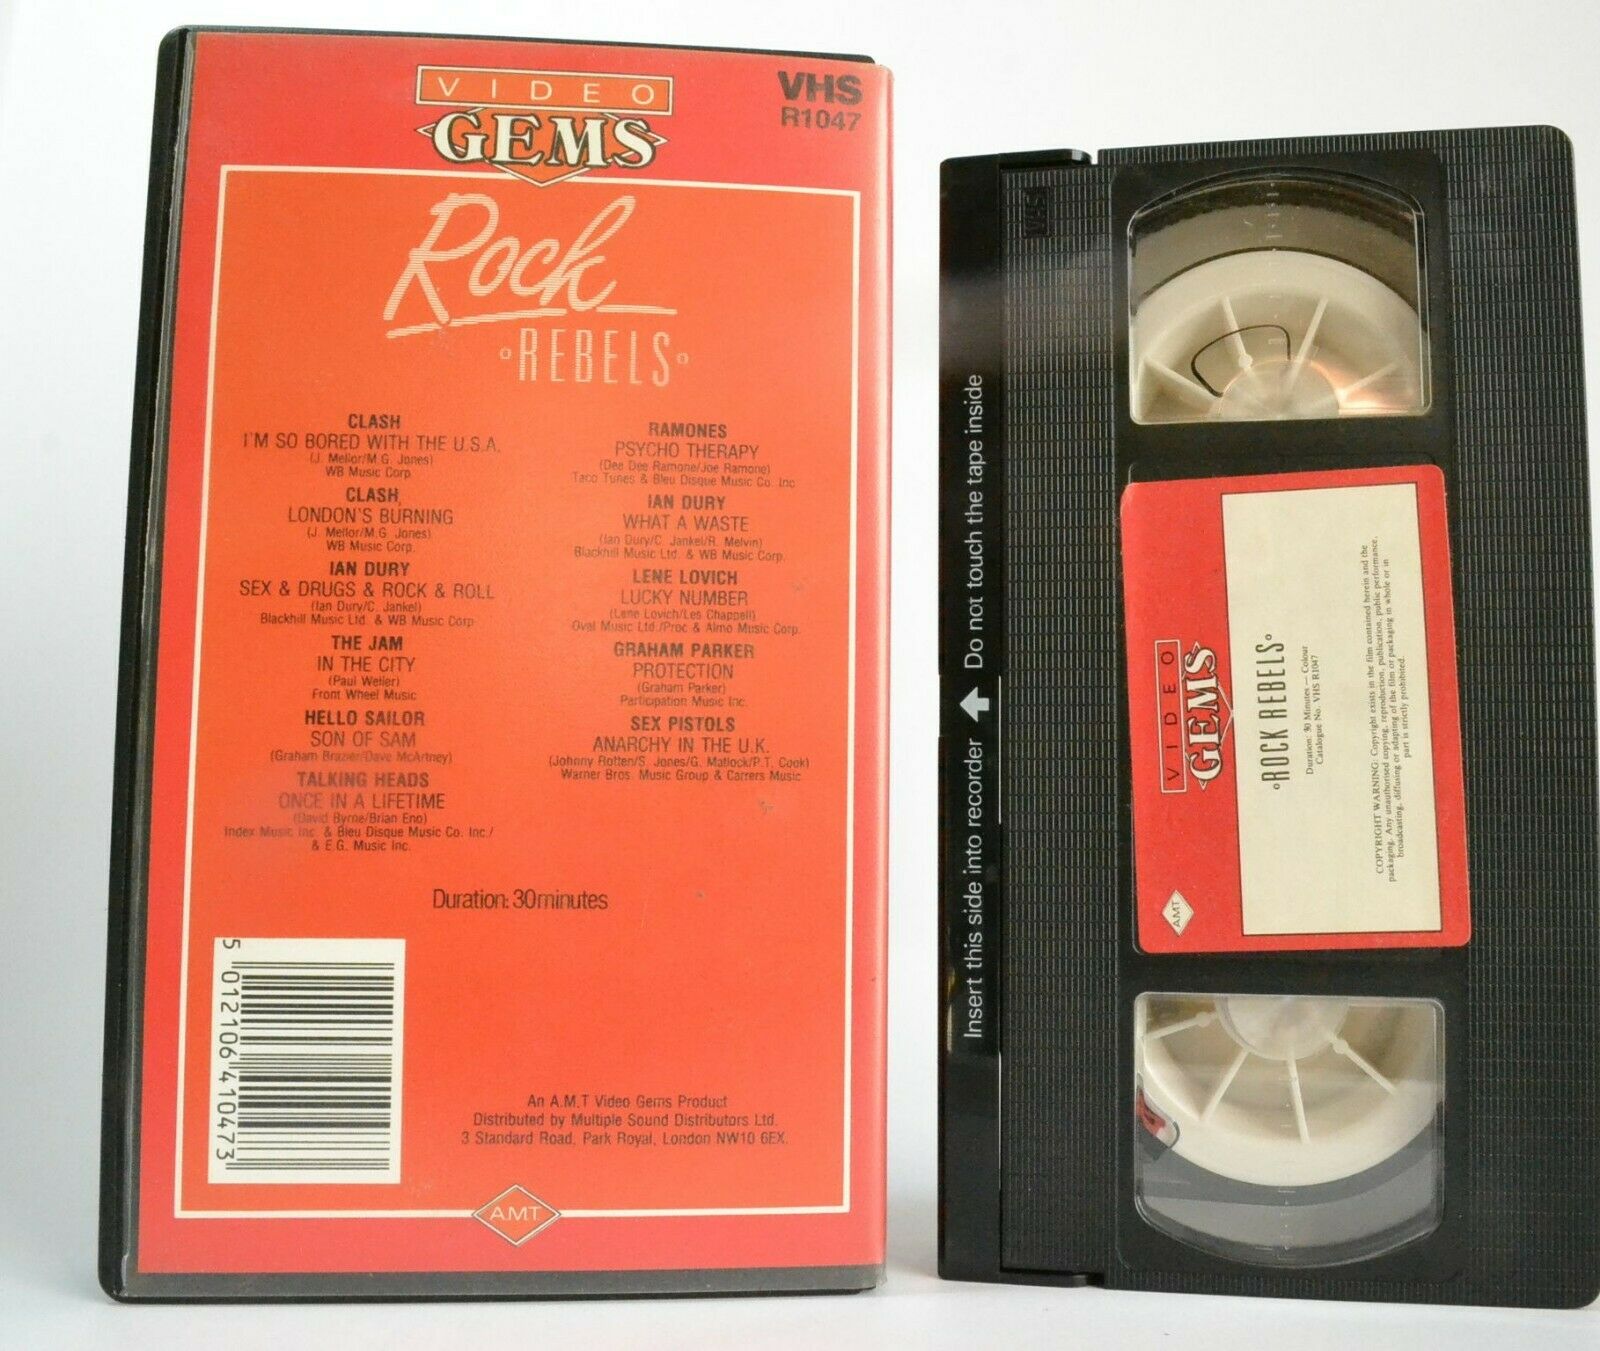 Rock Rebels: The Clash - Talking Heads - Ramones - Sex Pistoles - The Jam - VHS-